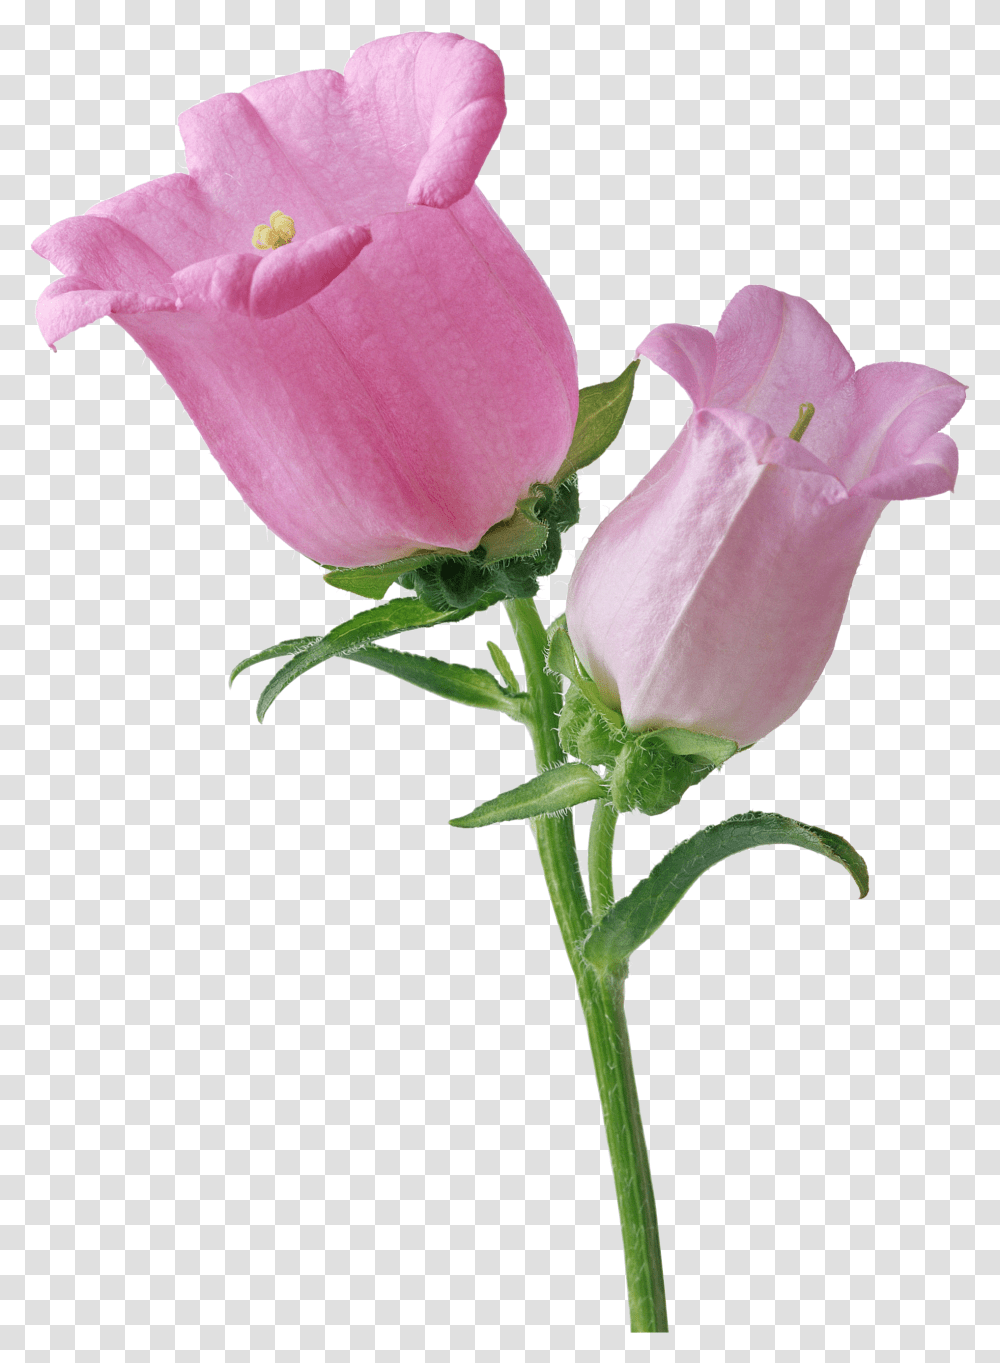 Pink Single Bellflower 48709 Free Icons And Flor Gif, Plant, Blossom, Rose, Petal Transparent Png